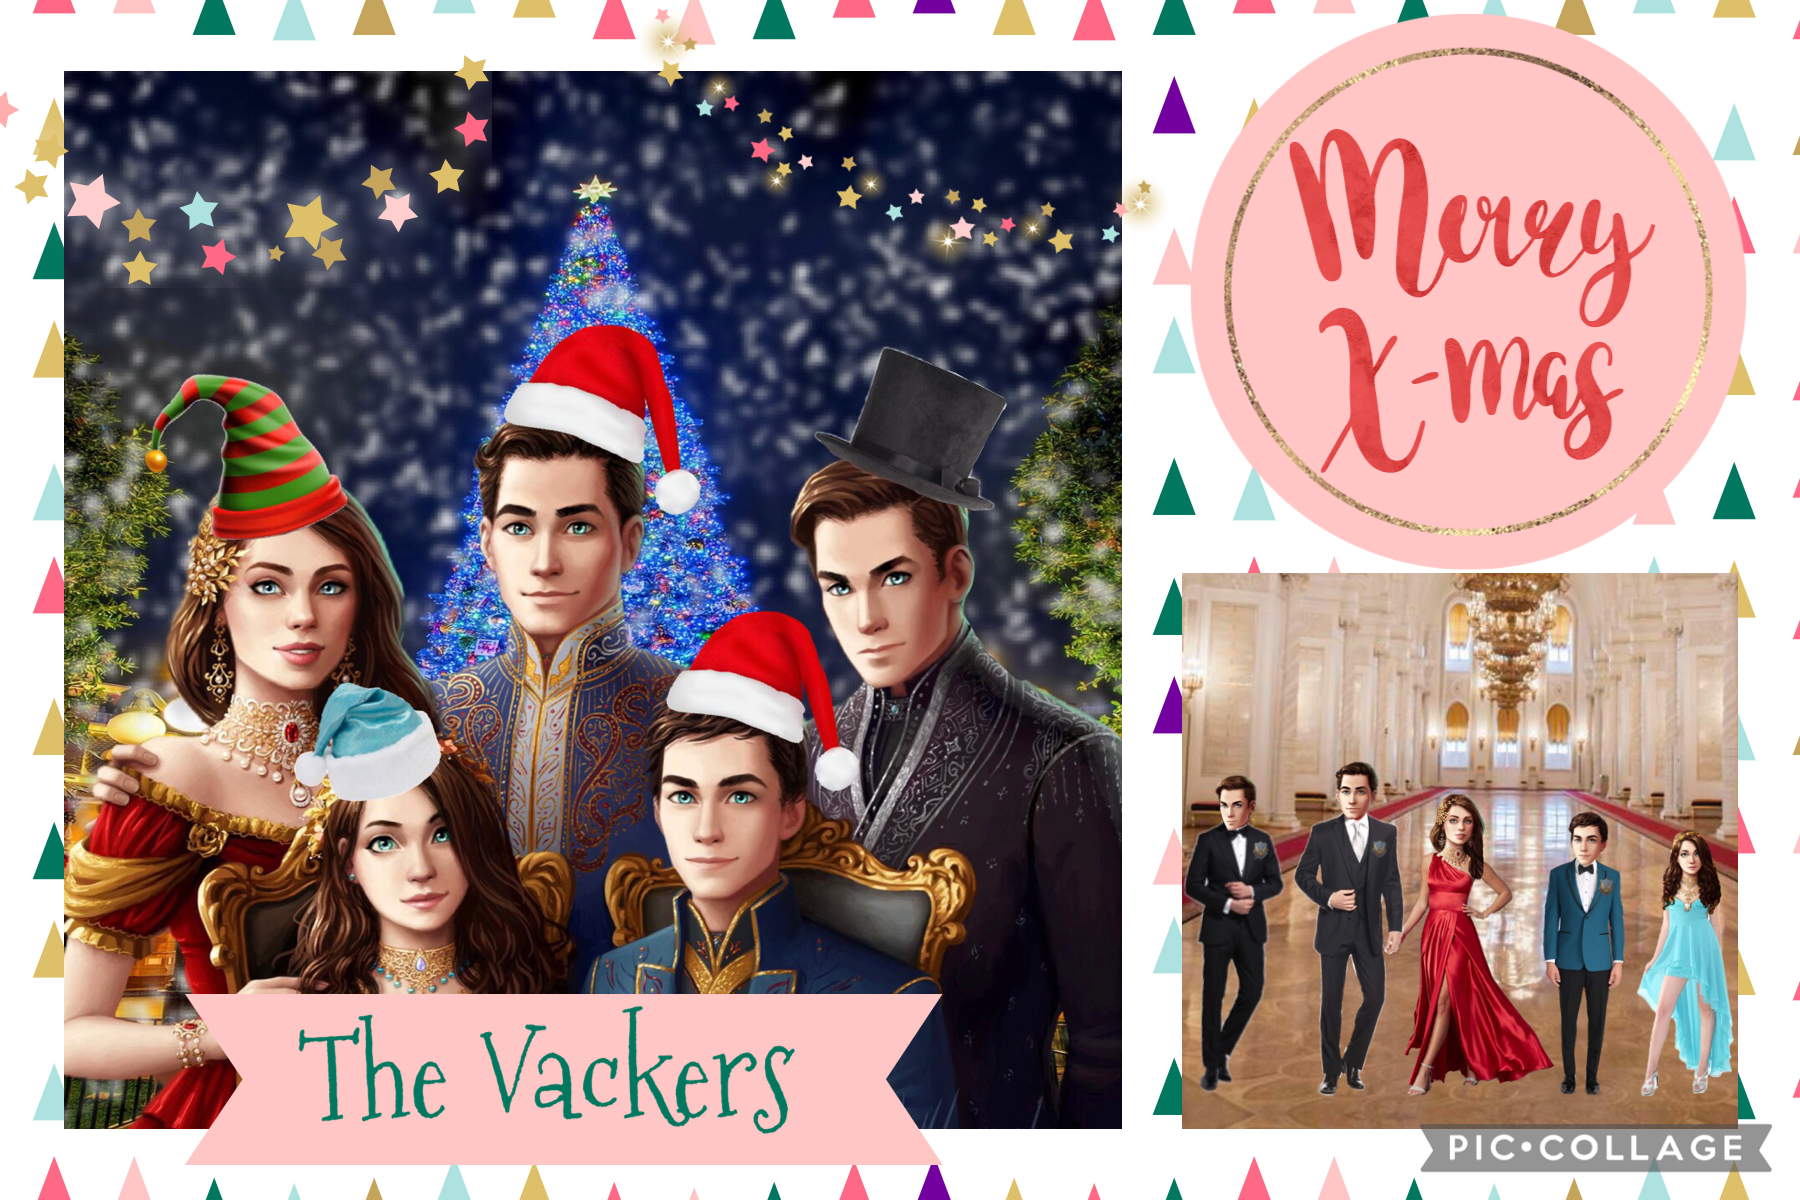 Merry Christmas, from the Vackers! #kotlc #thevackerfamily #thevackers (The Ruewen family coming soon!)